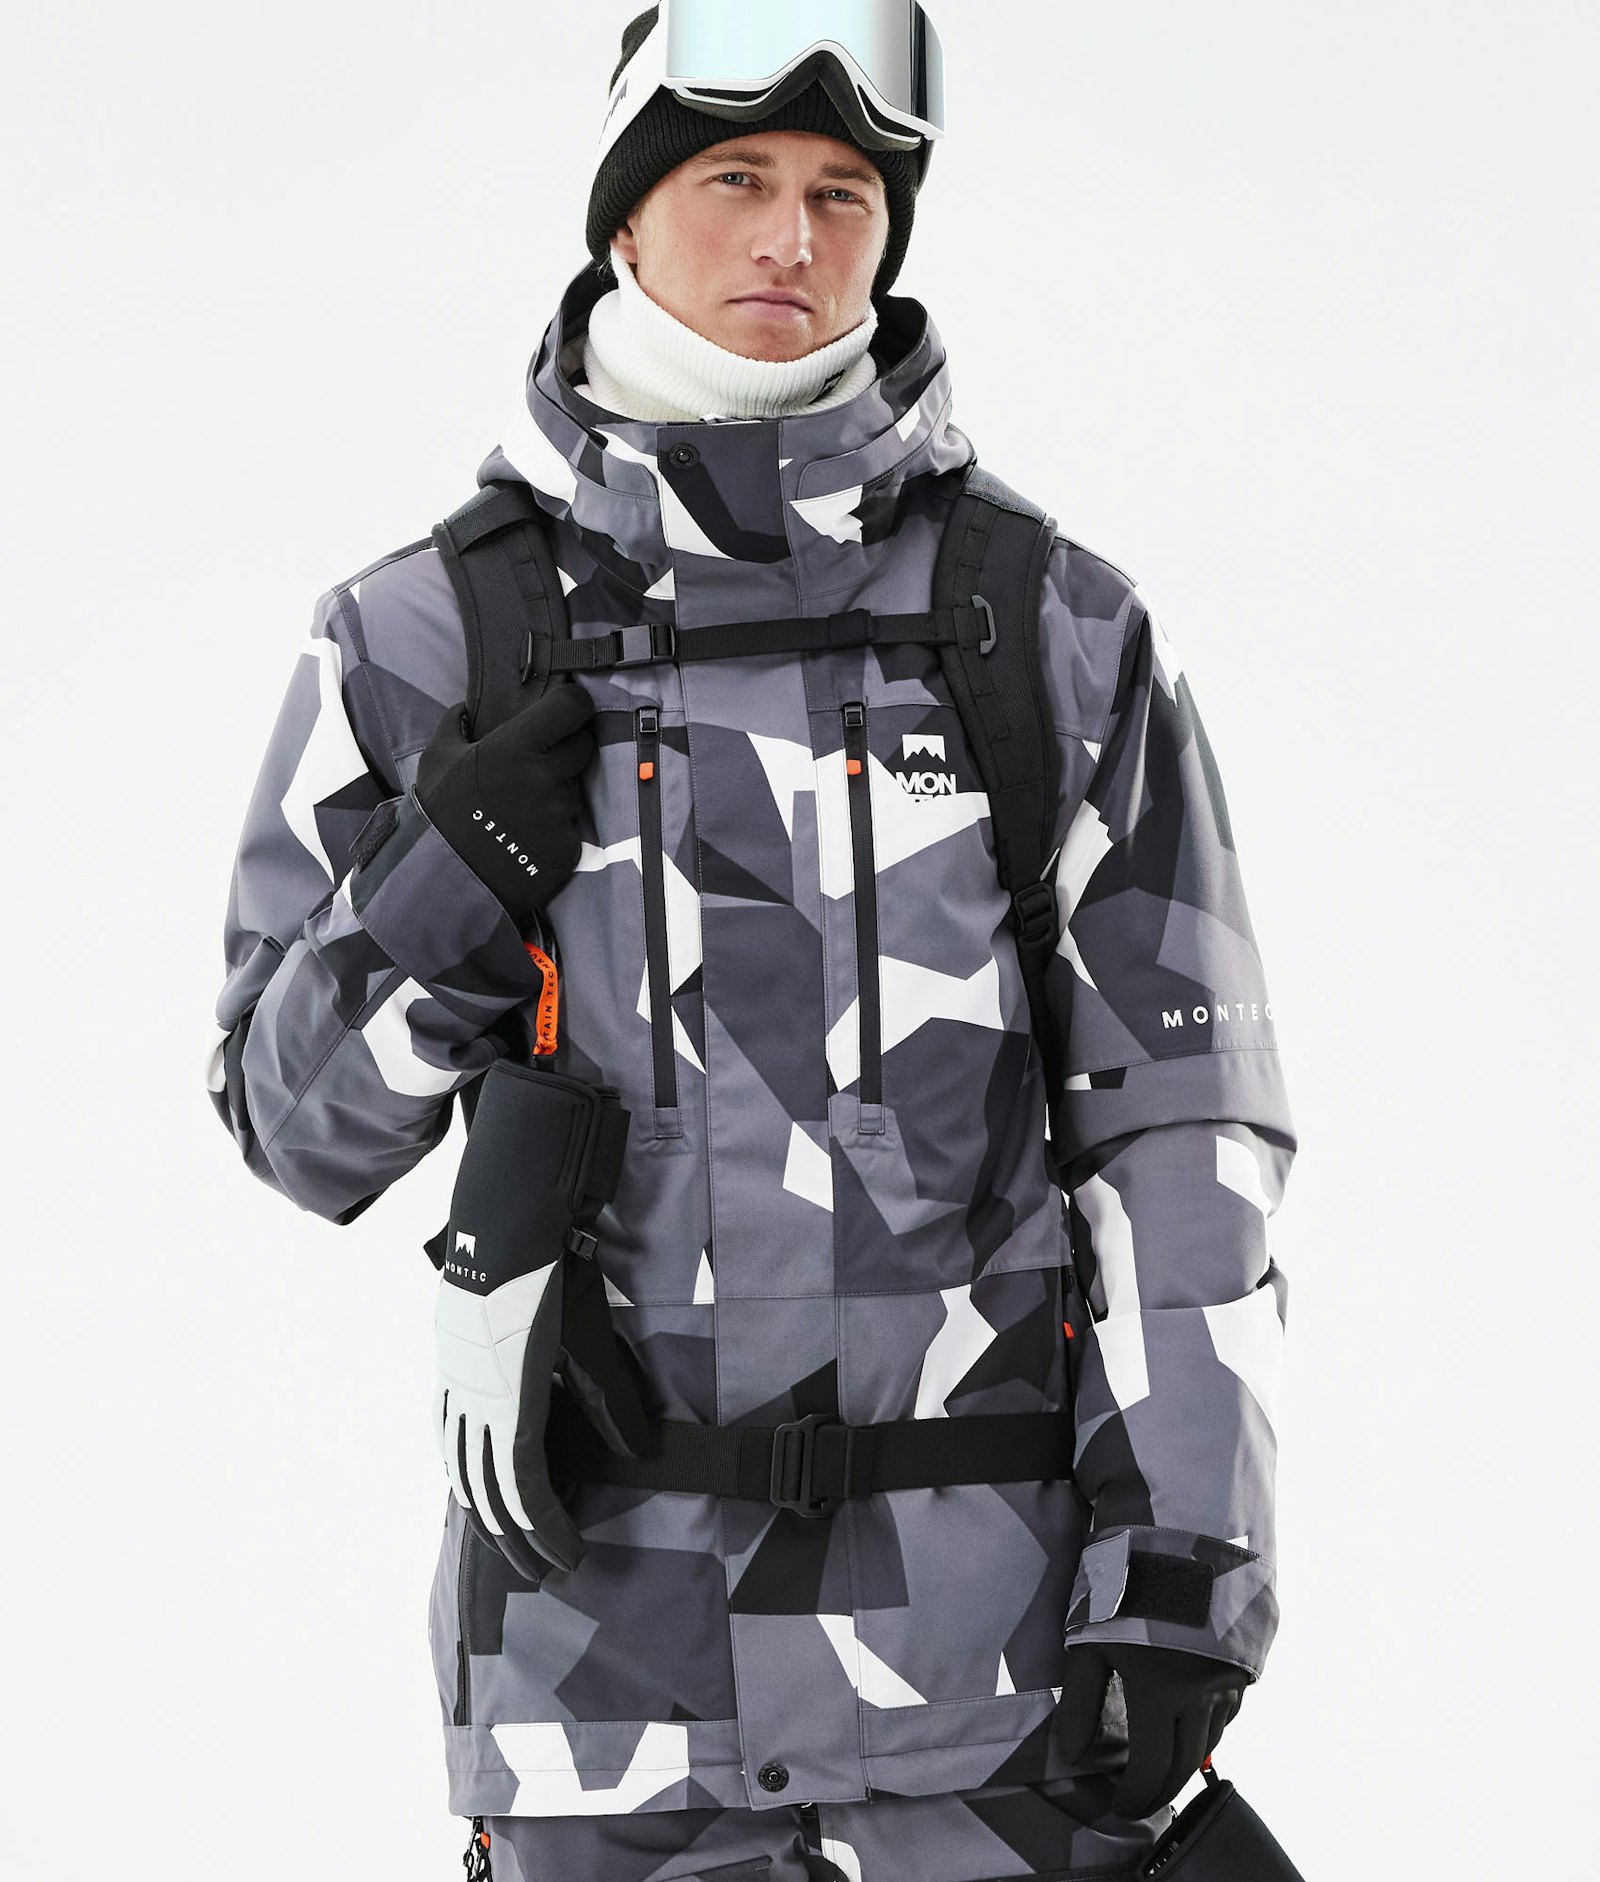 Montec Fawk 2021 Ski Jacket Men Arctic Camo